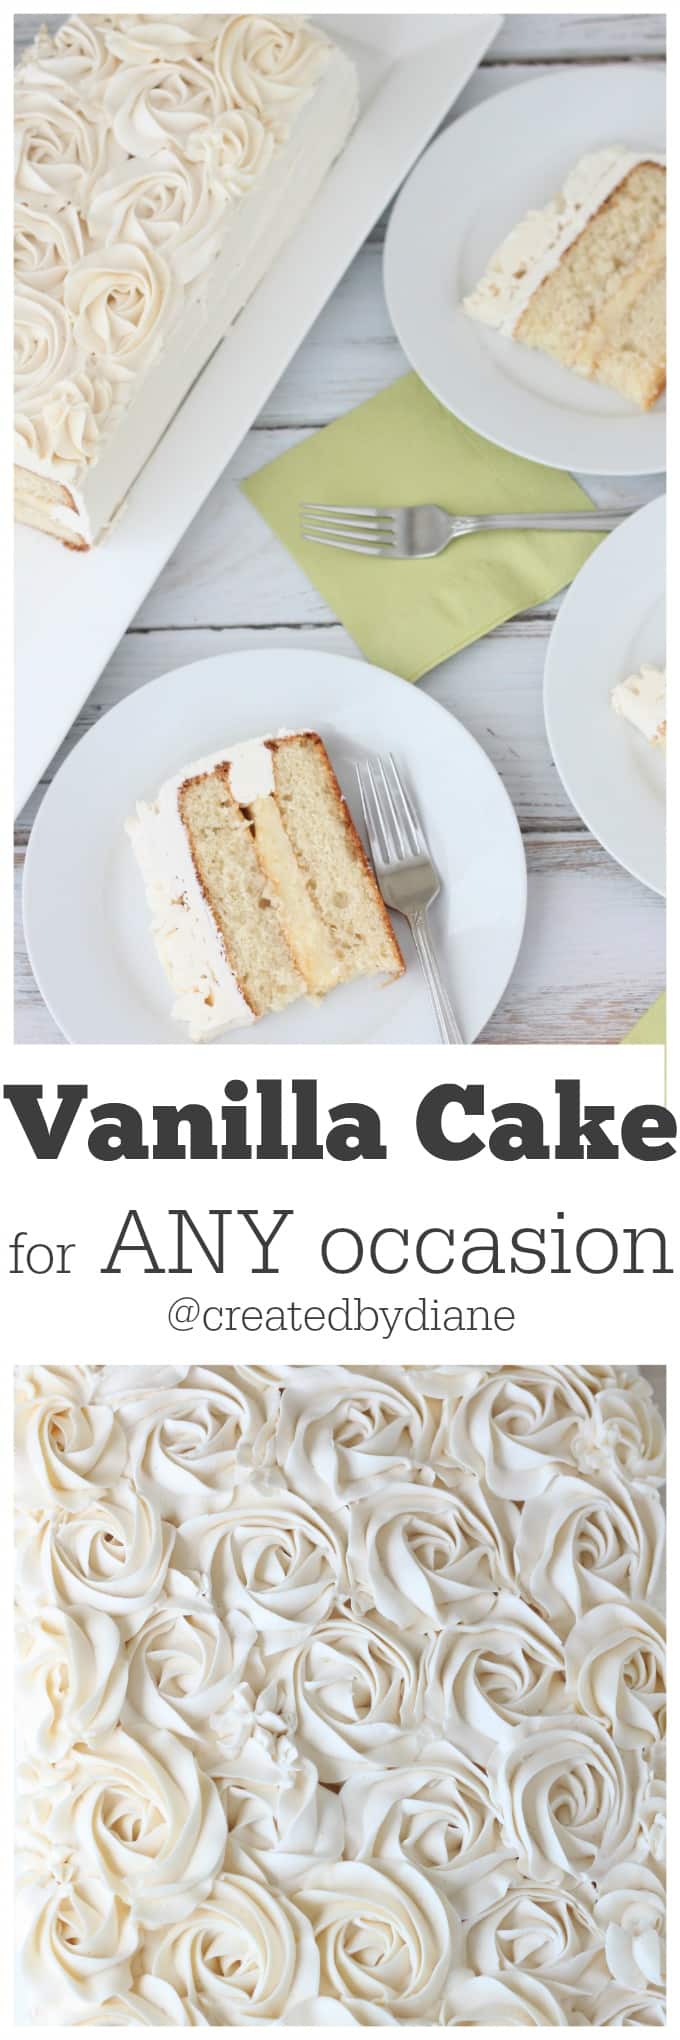 Vanilla Cake for any occasion @createdbydiane